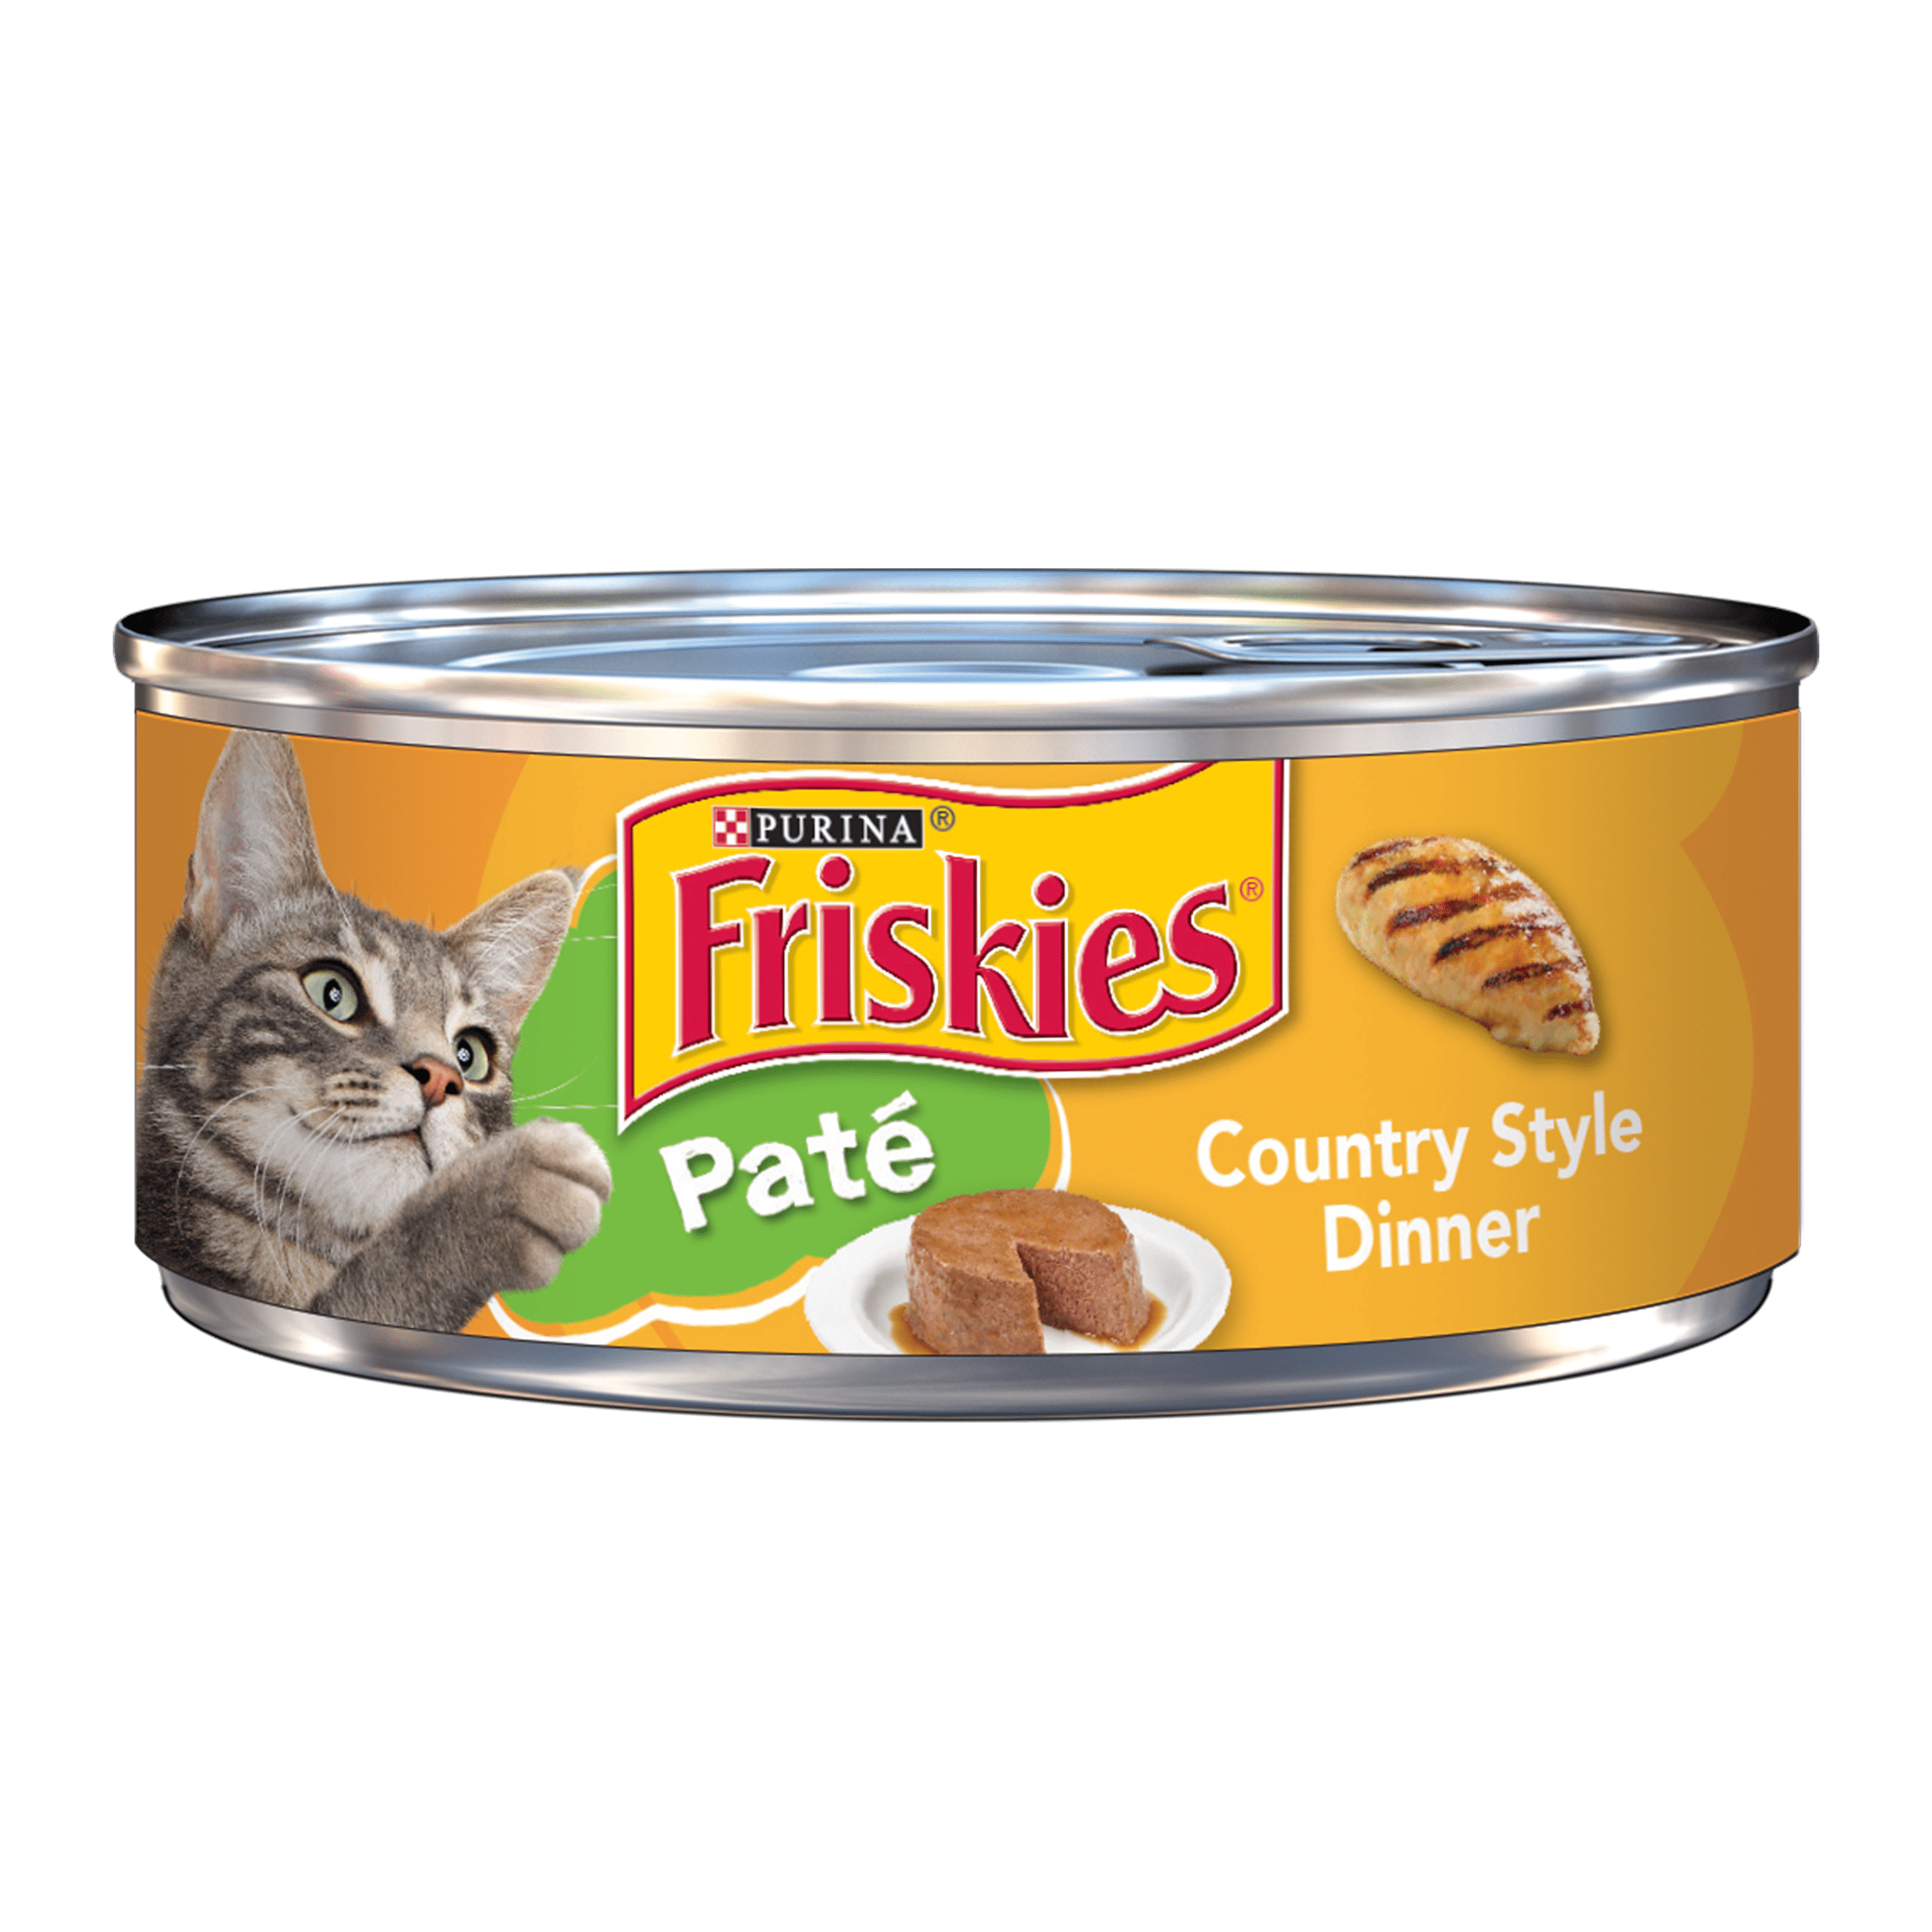 Purina Friskies Cat Food Recall